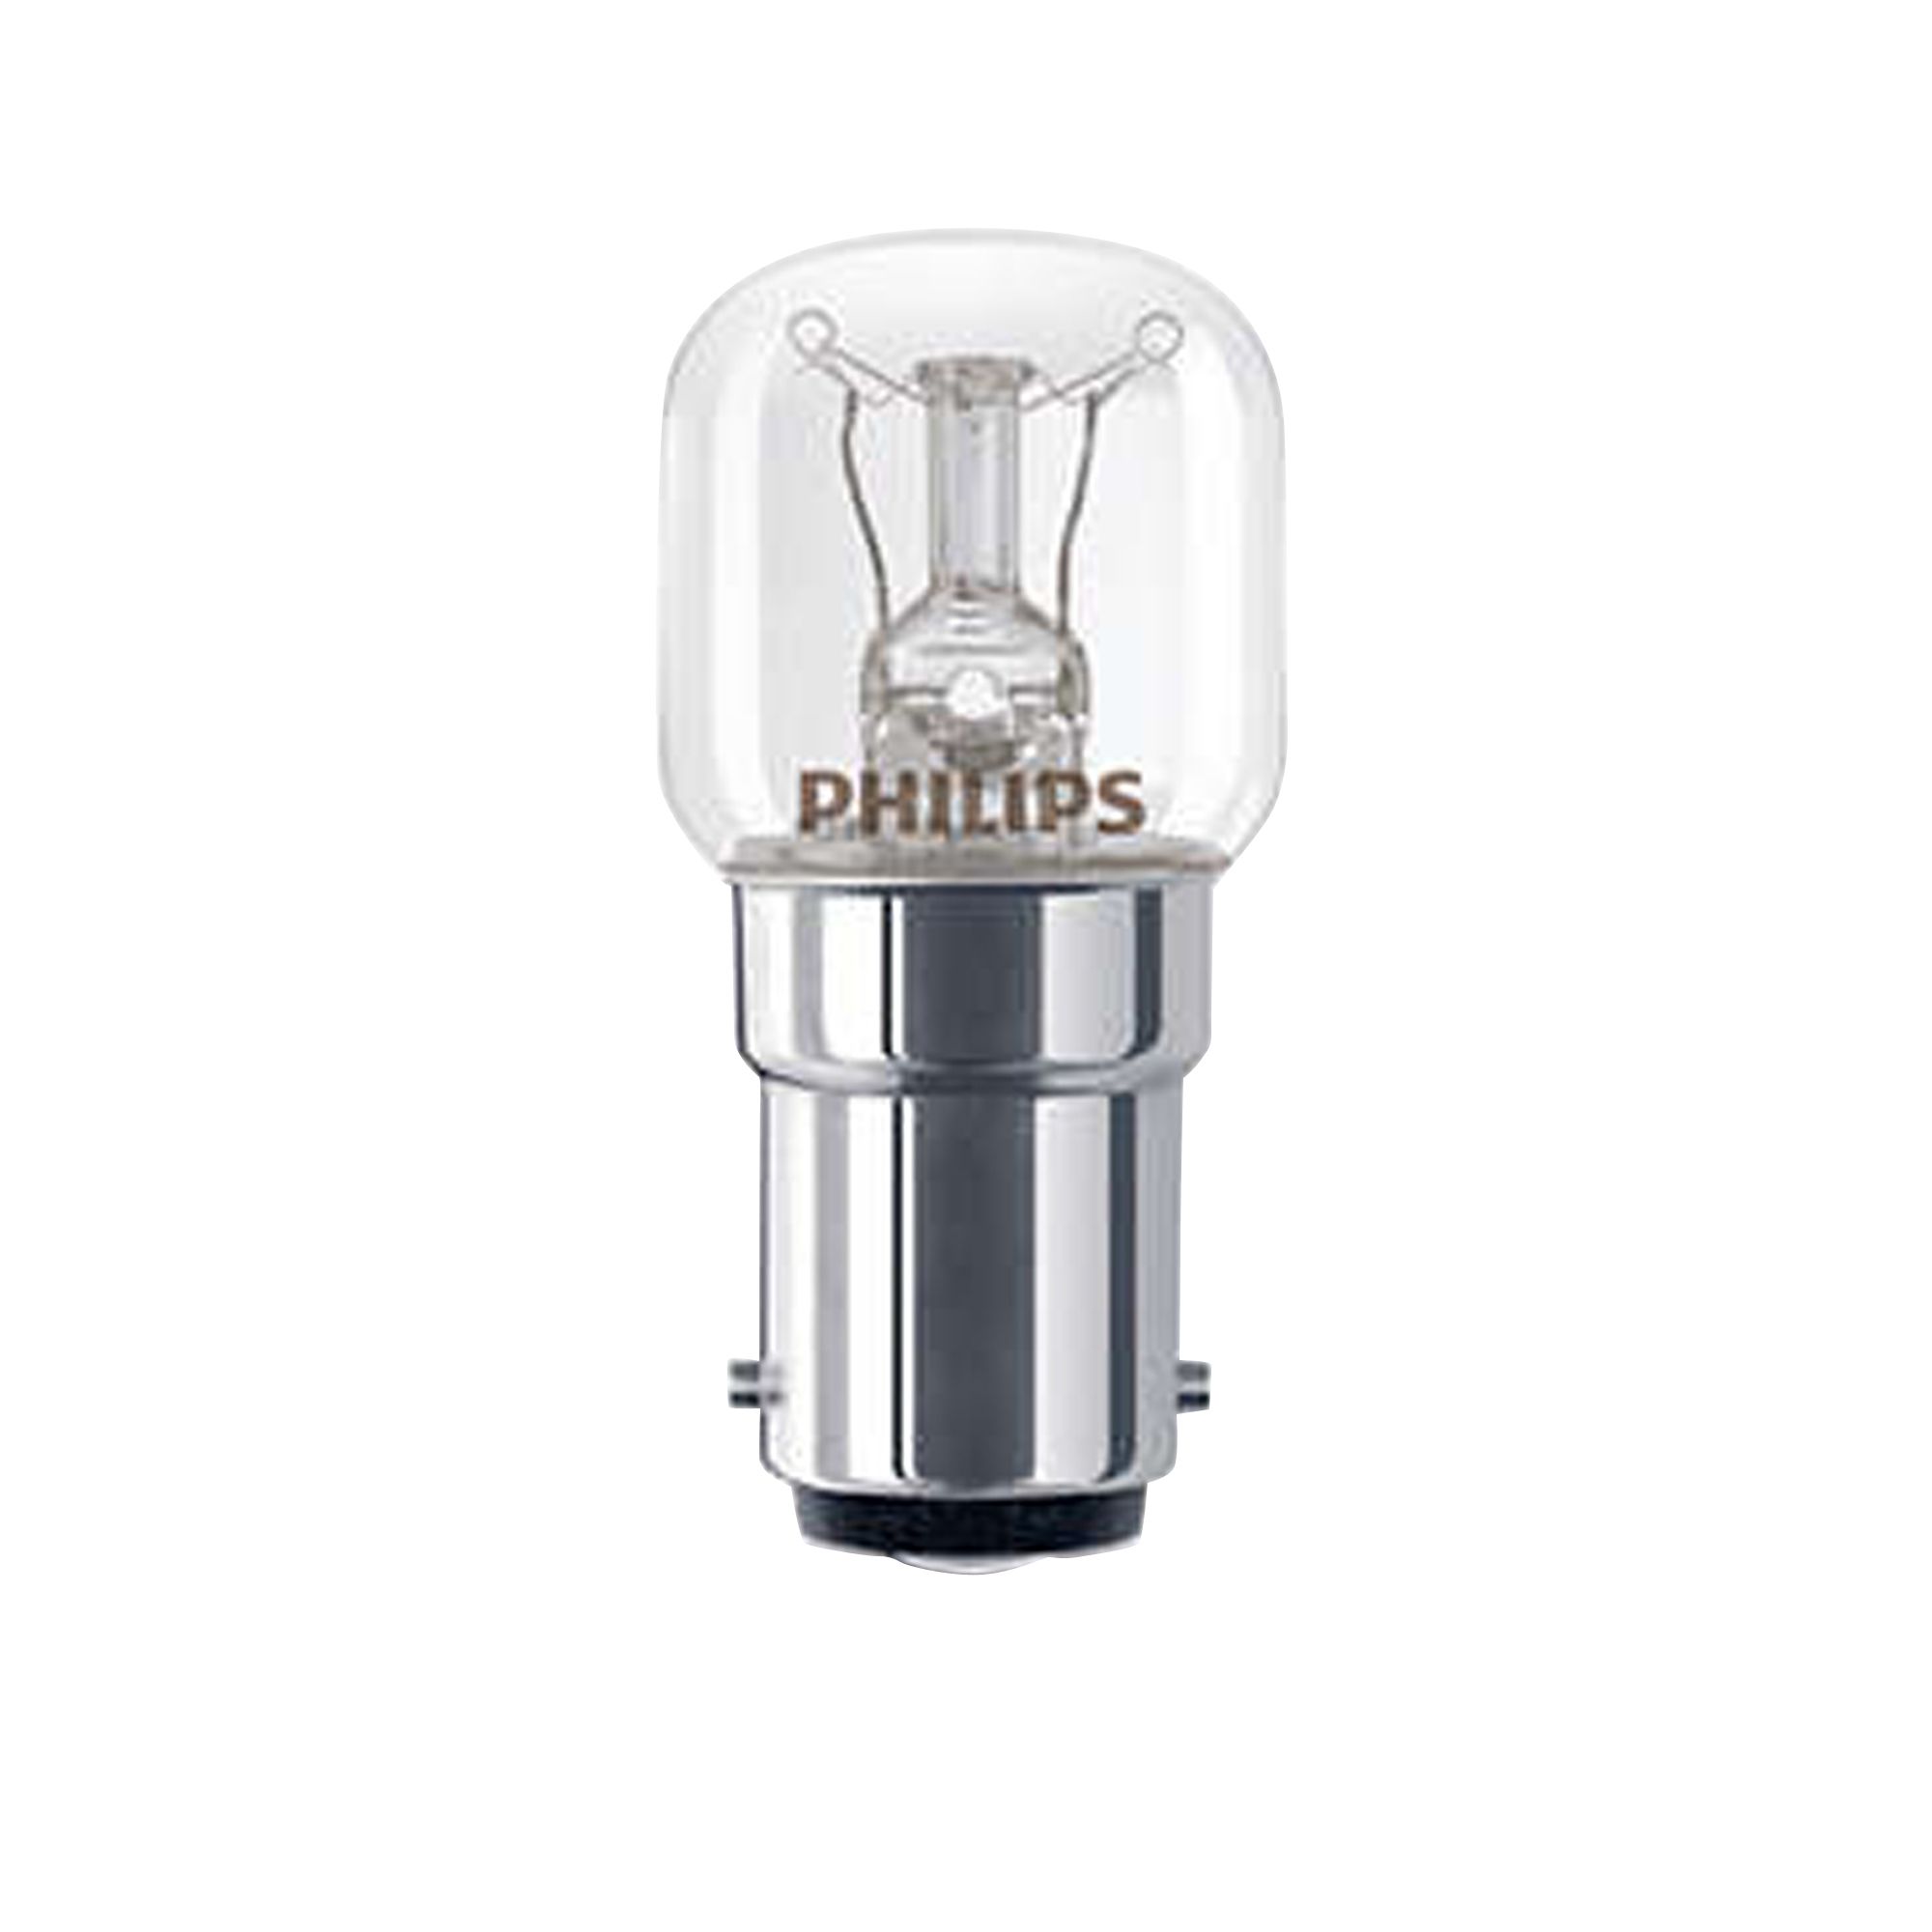 Philips 15W Sewing machine Light bulb, 2 Pack